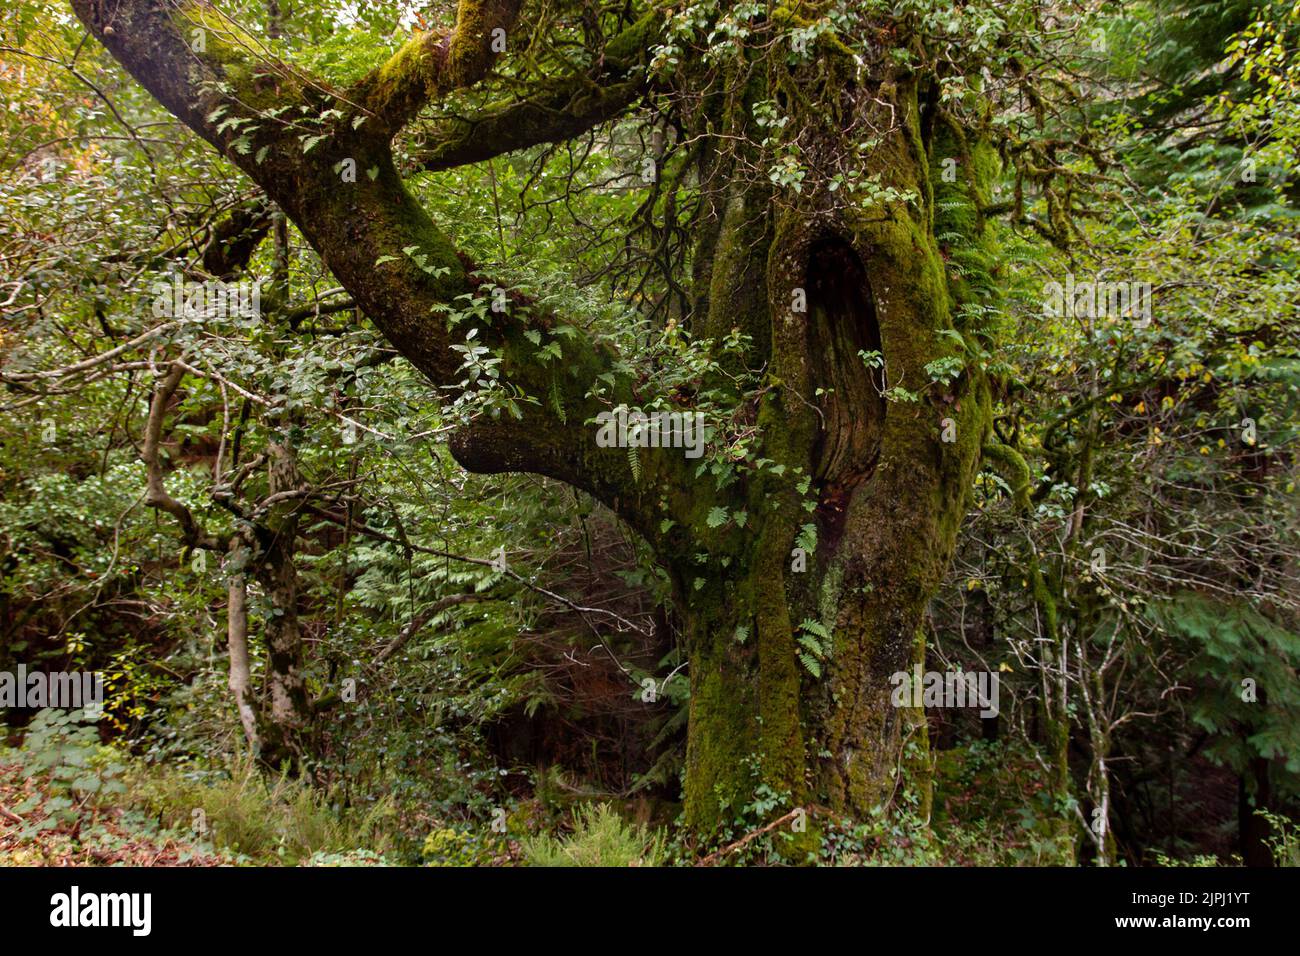 Europäische Eiche (Quercus robur) hundertjährigen Baum im grünen atlantischen Wald Stockfoto